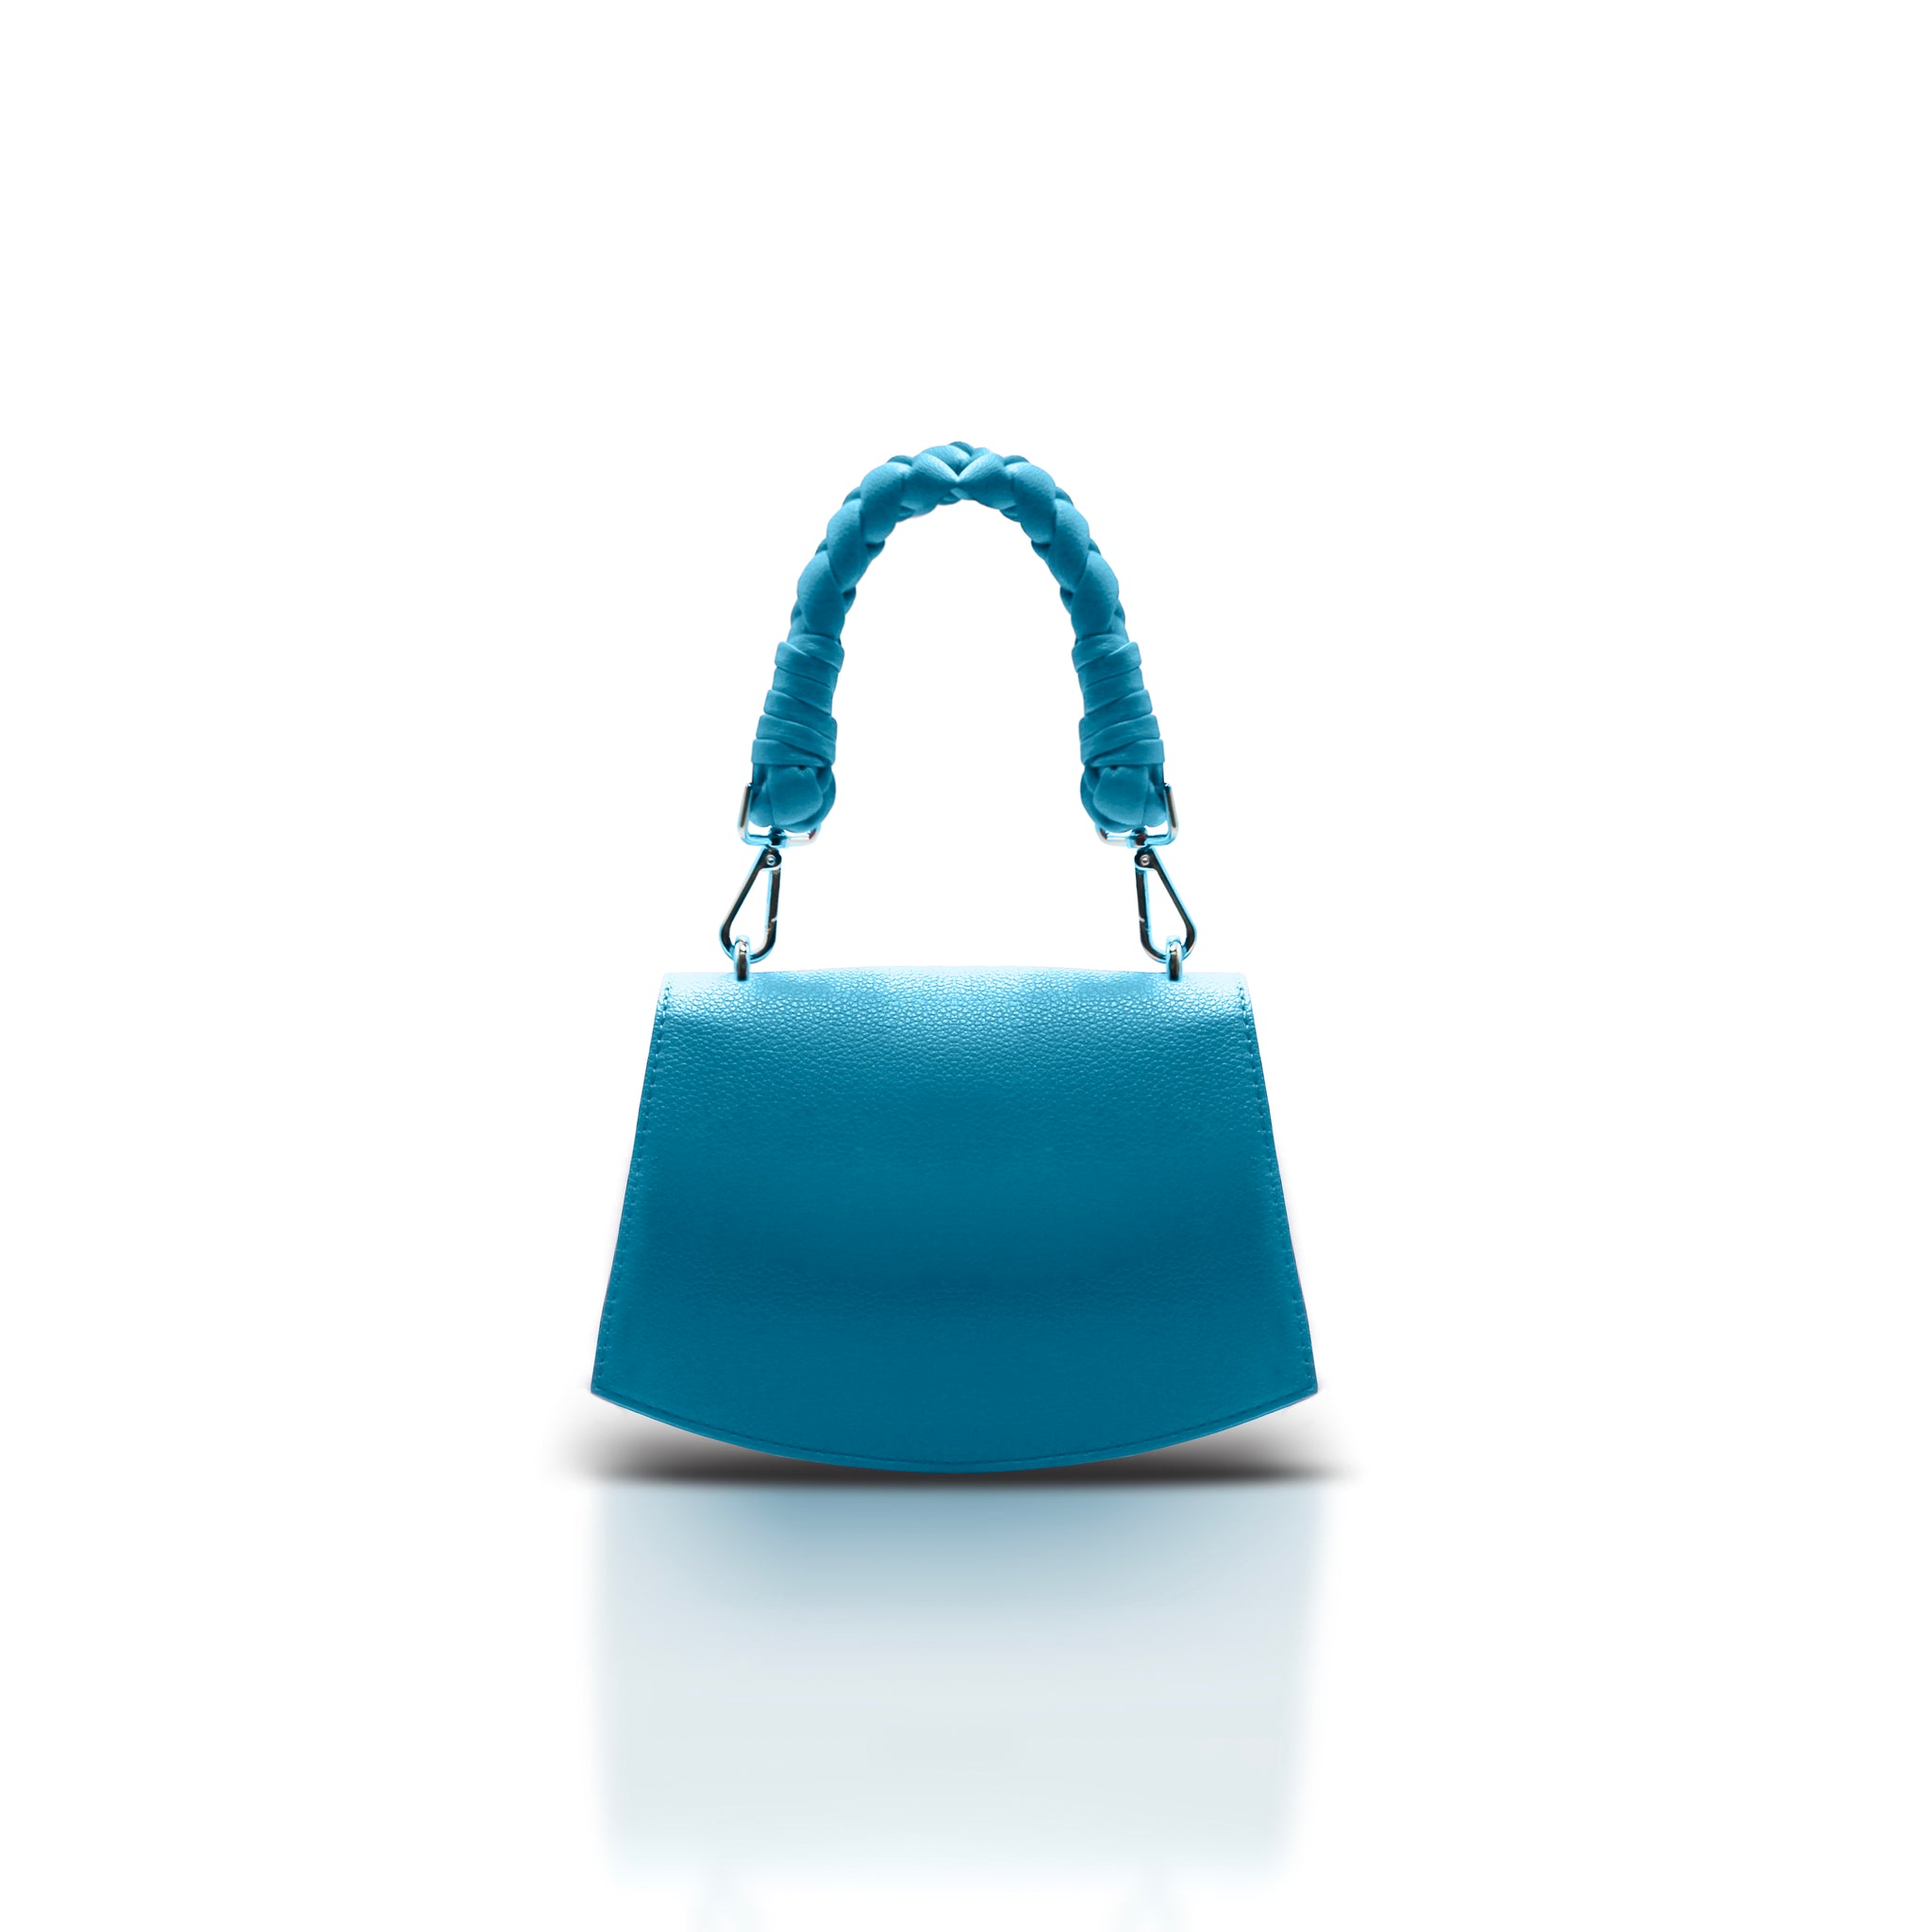 Turquoise mini bag